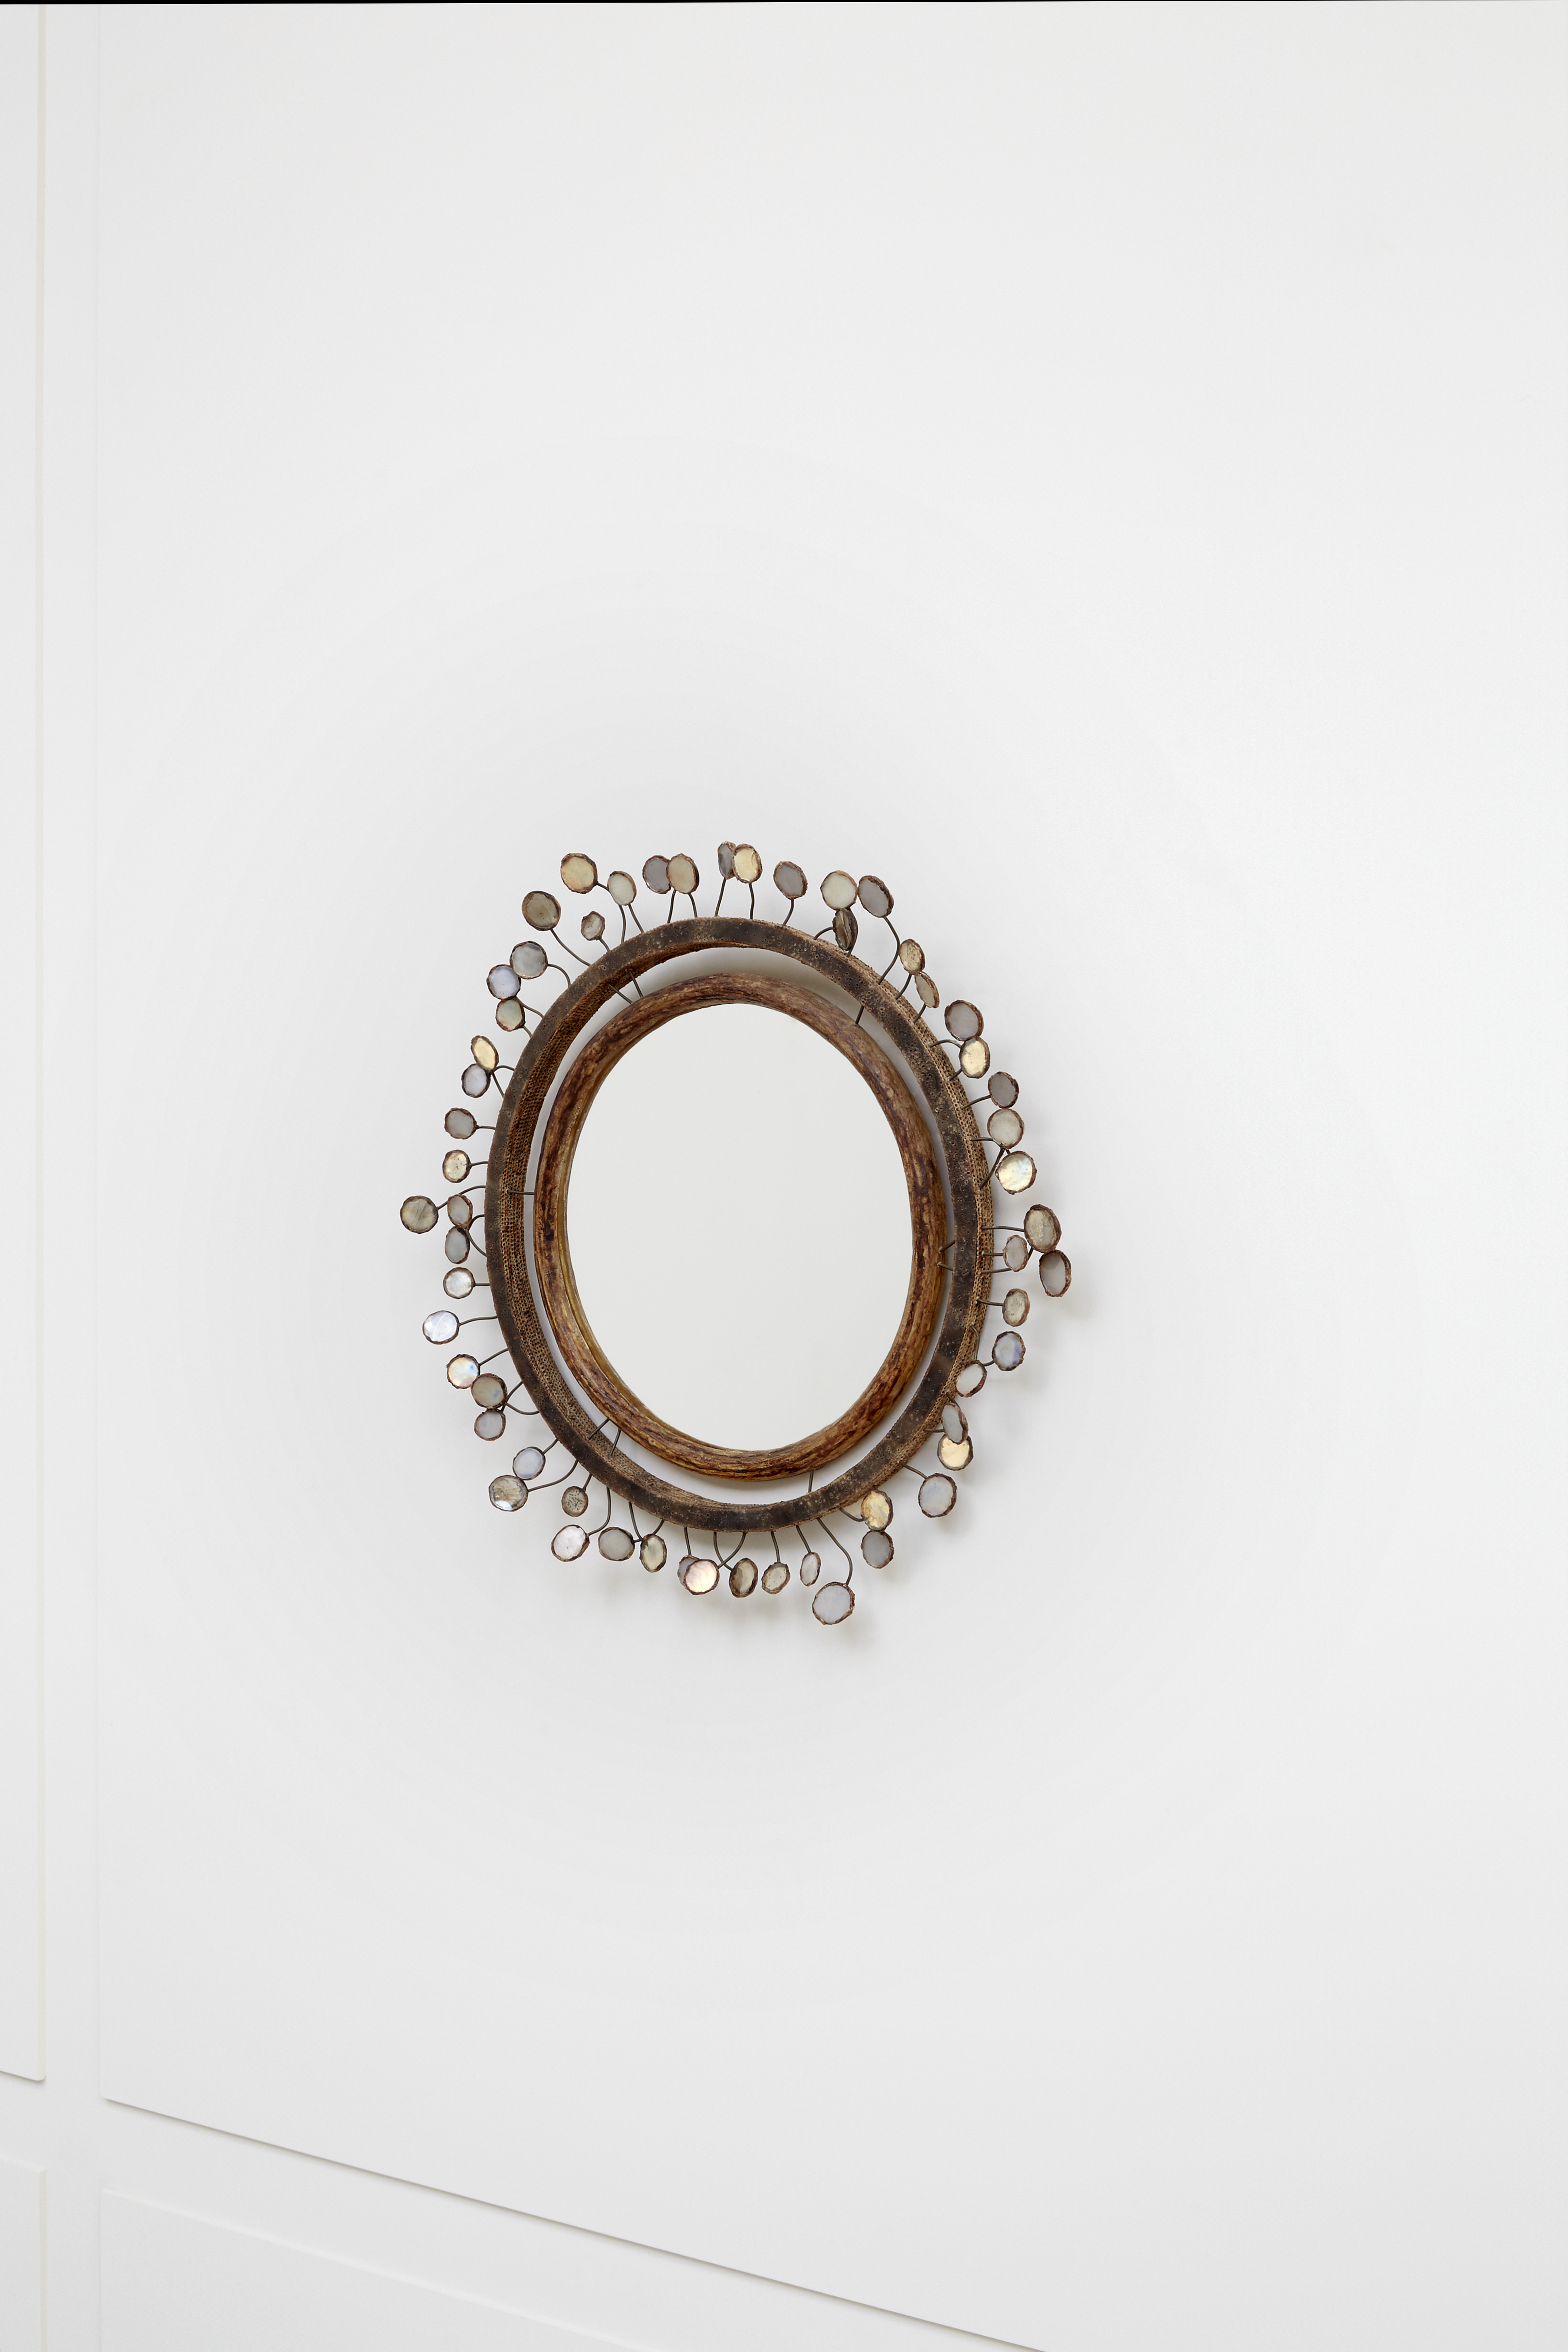 Line Vautrin, Rare “Sequins” mirror, vue 01